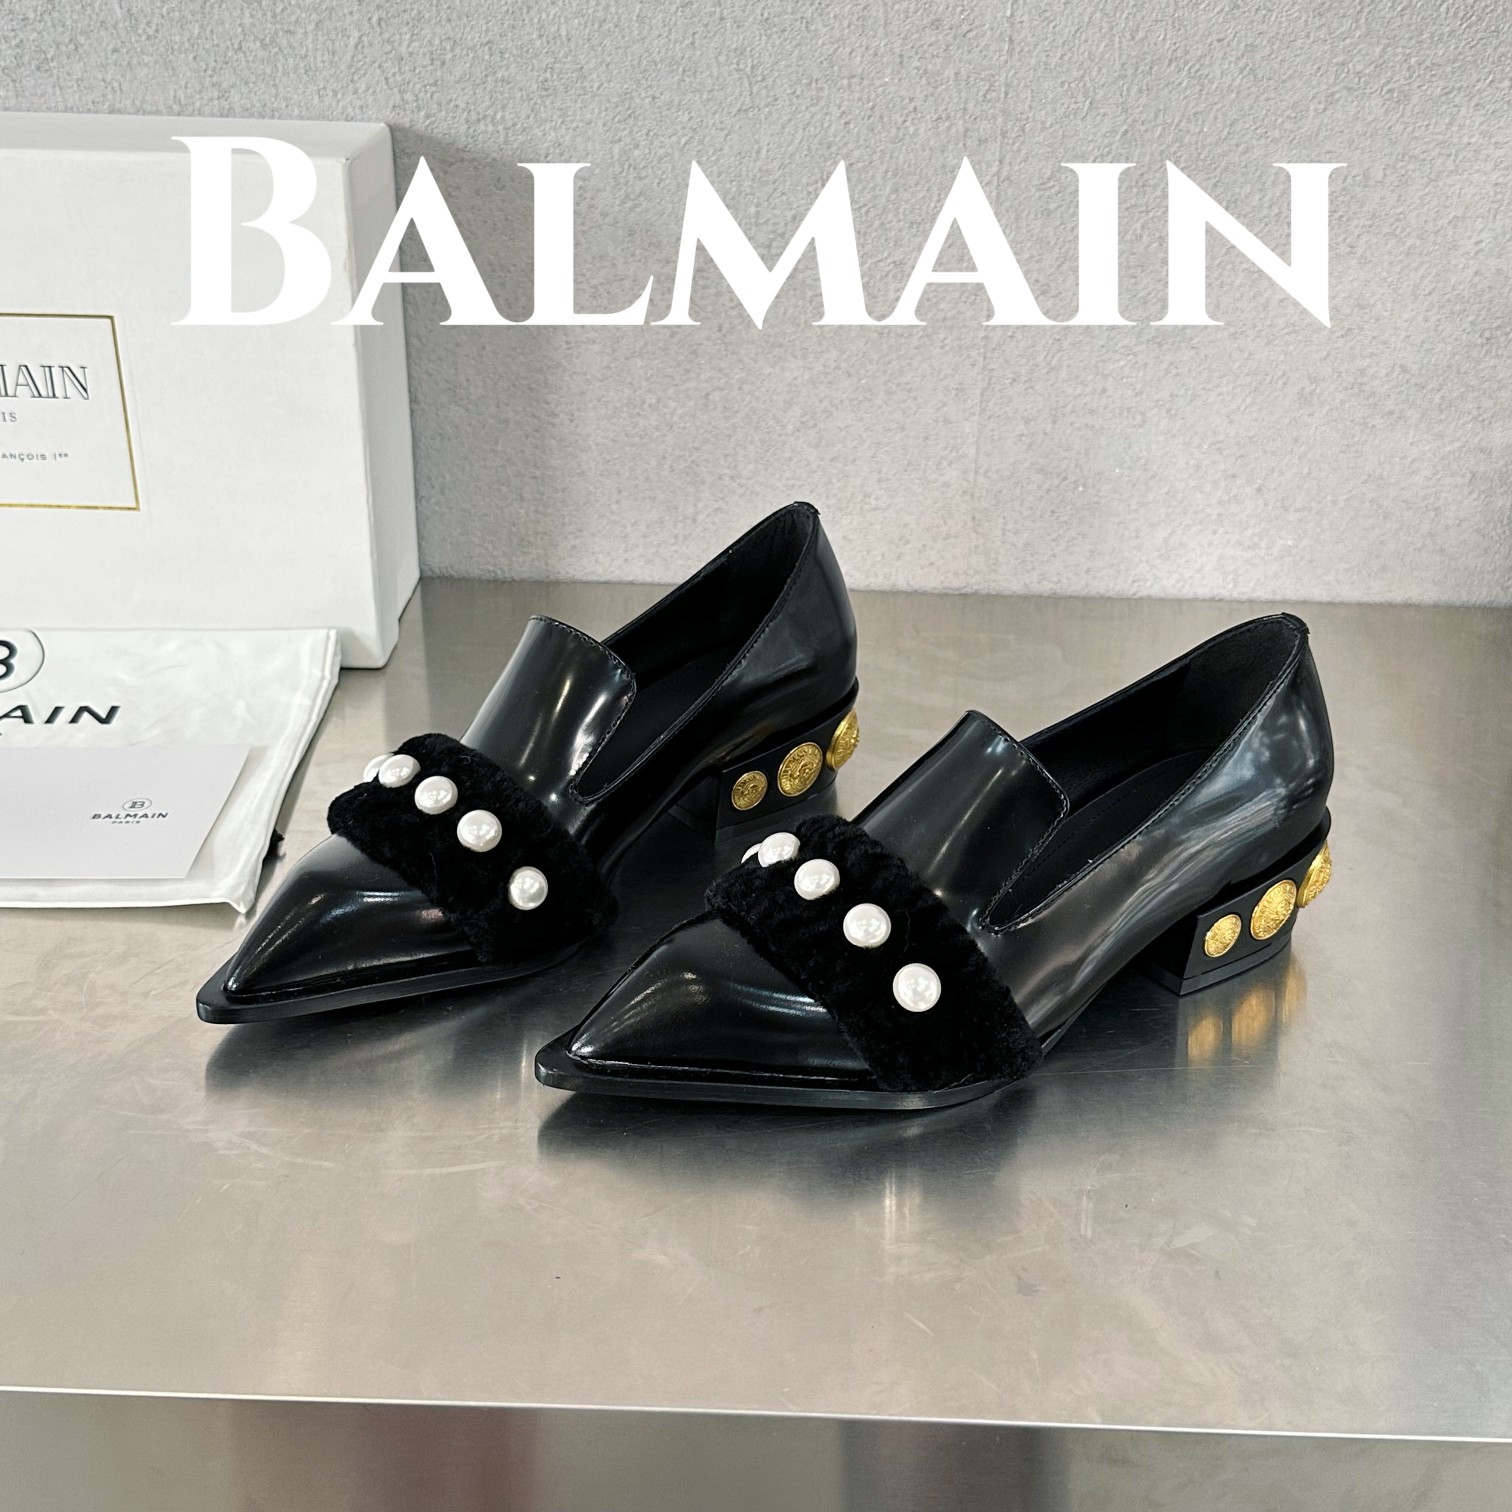 Balmain巴尔曼巴尔曼硬币羔羊毛珍珠单鞋此款黑色皮革方跟金色硬币镶片尖头会标图案海外订购原版1:1完